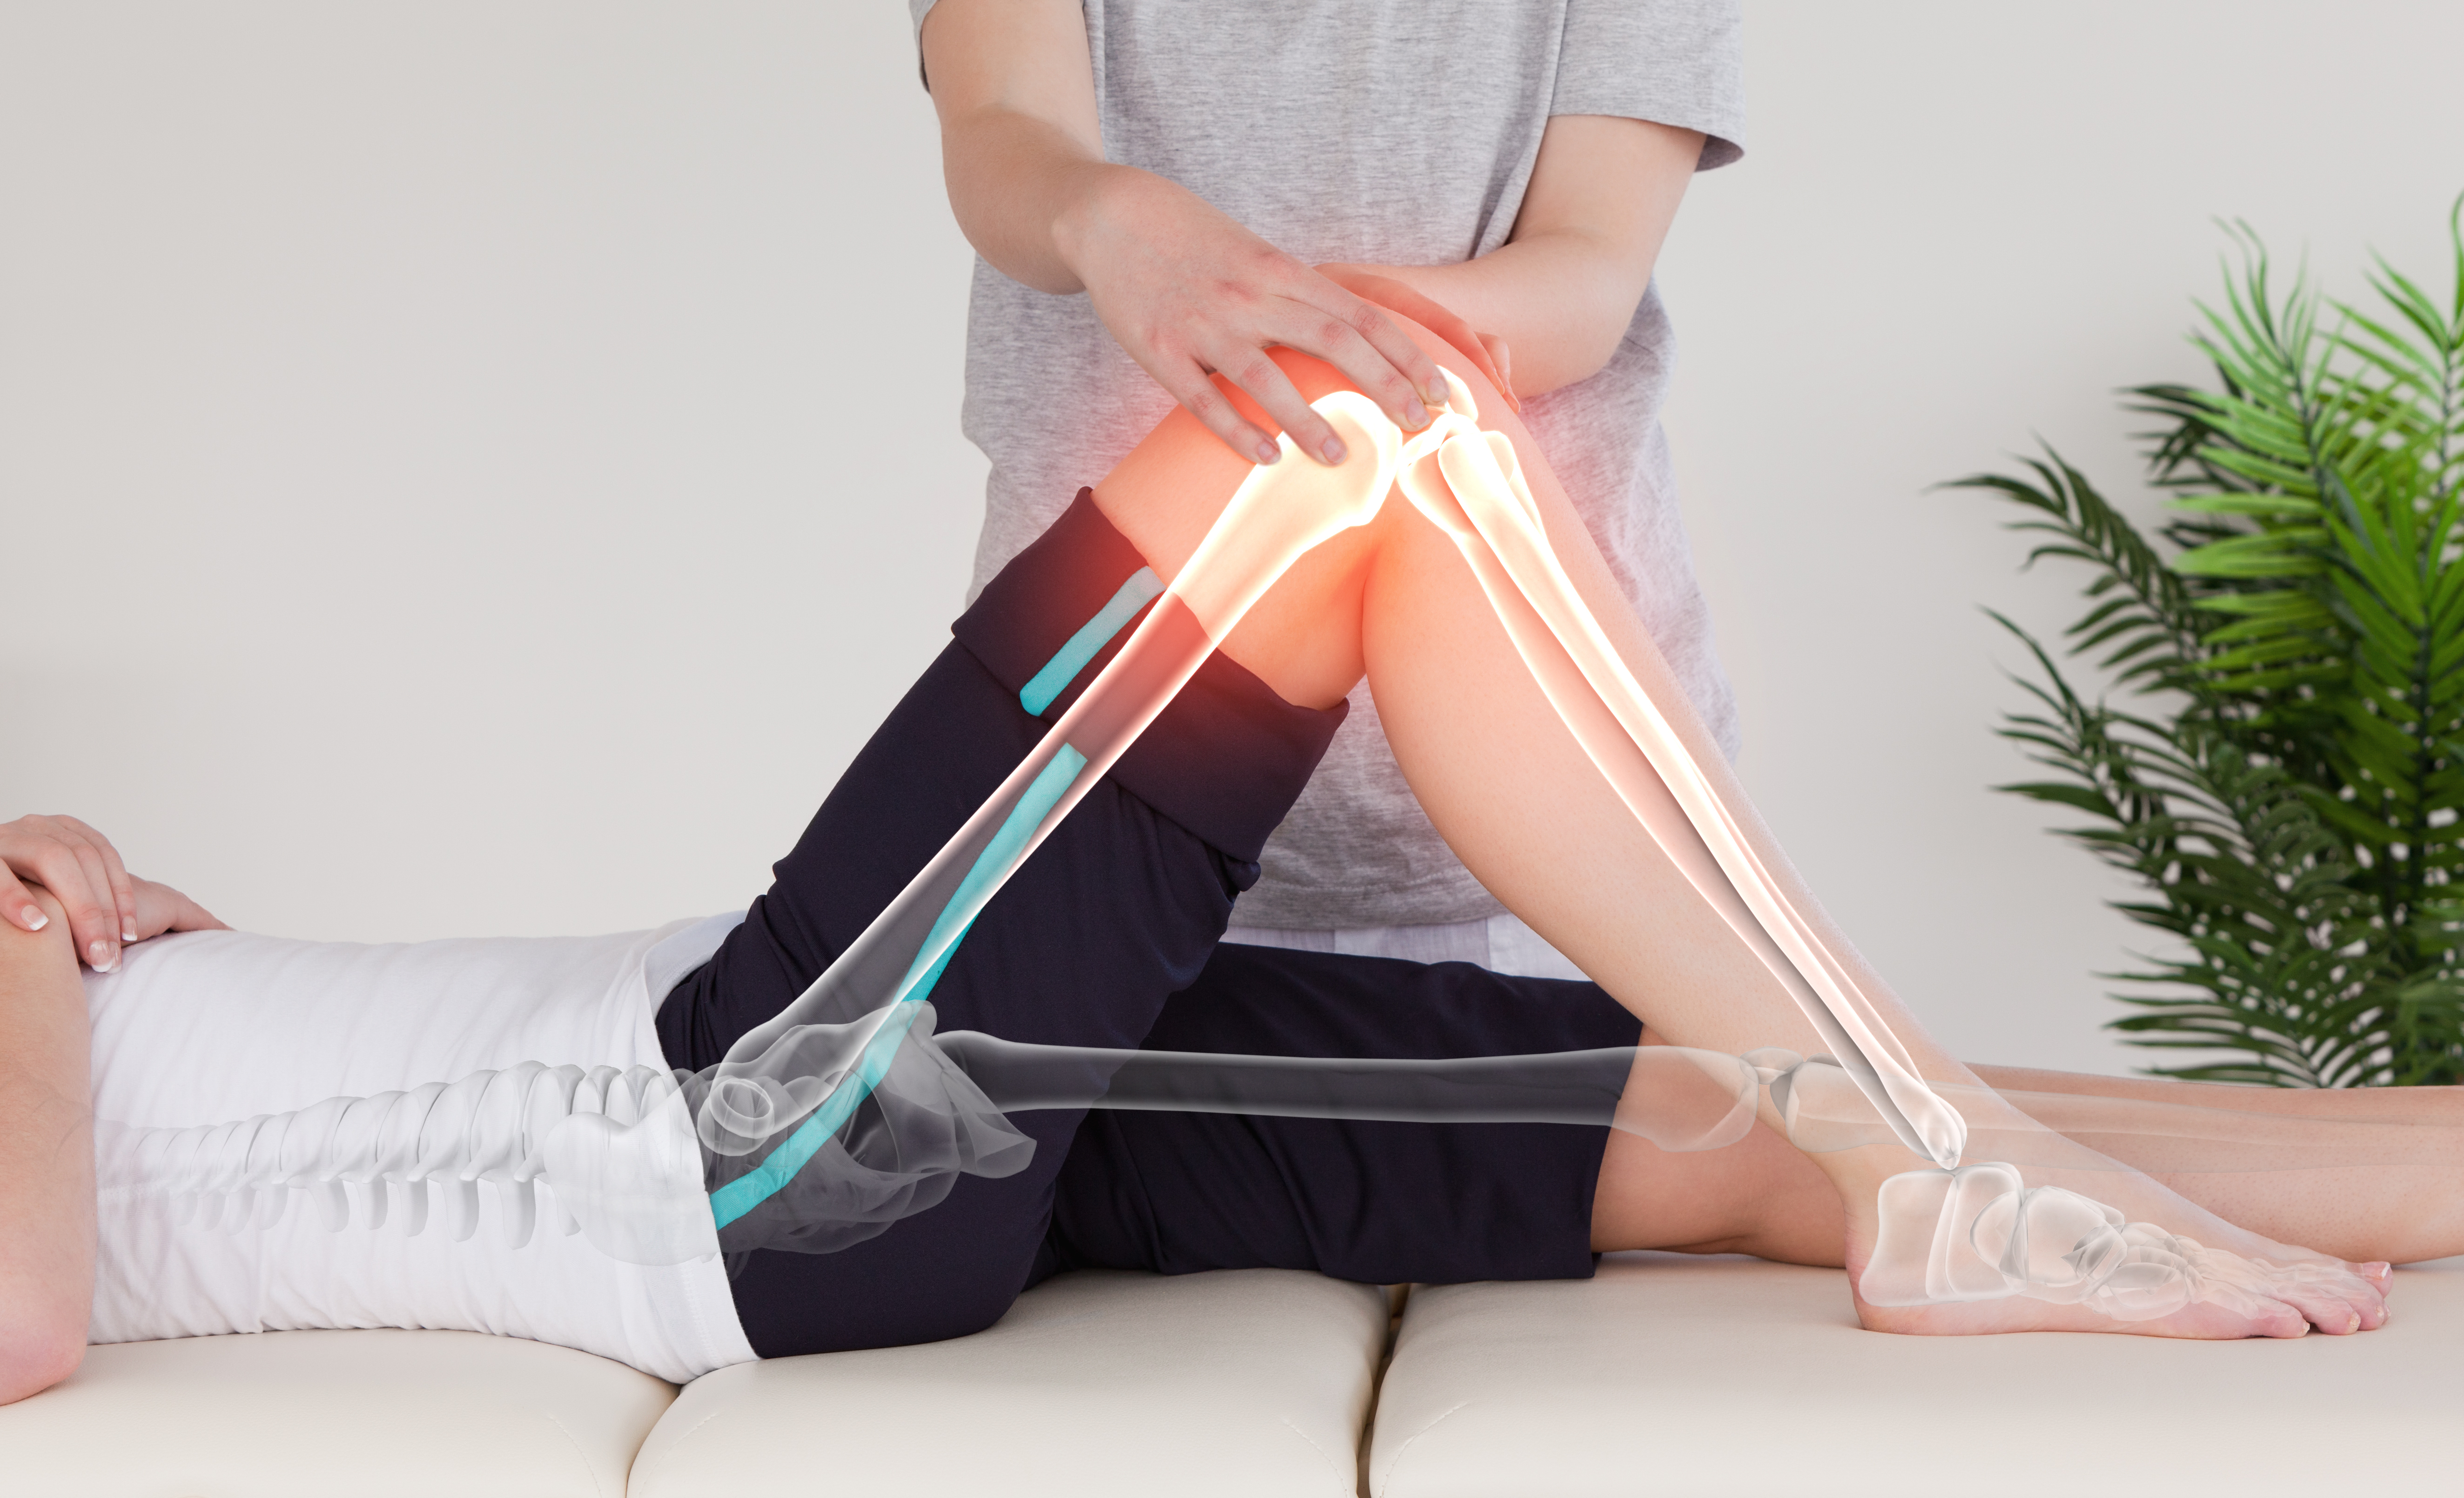 Illuminated spine and leg